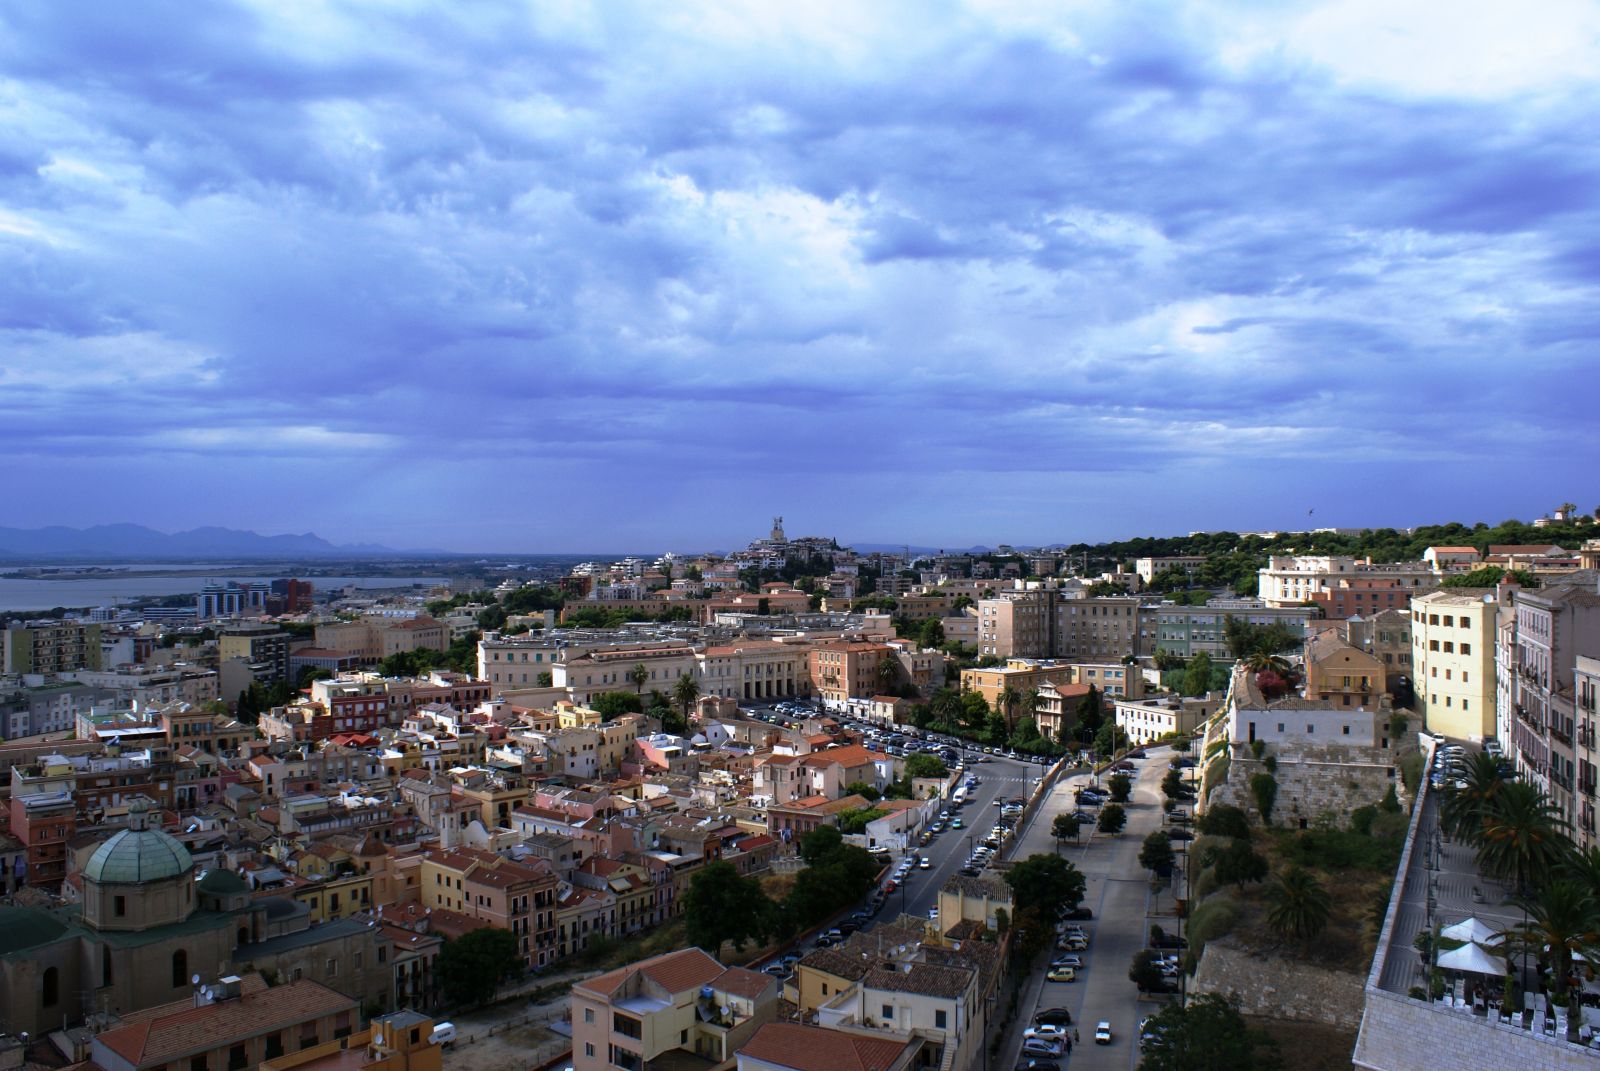 Cagliari aerial view of the city